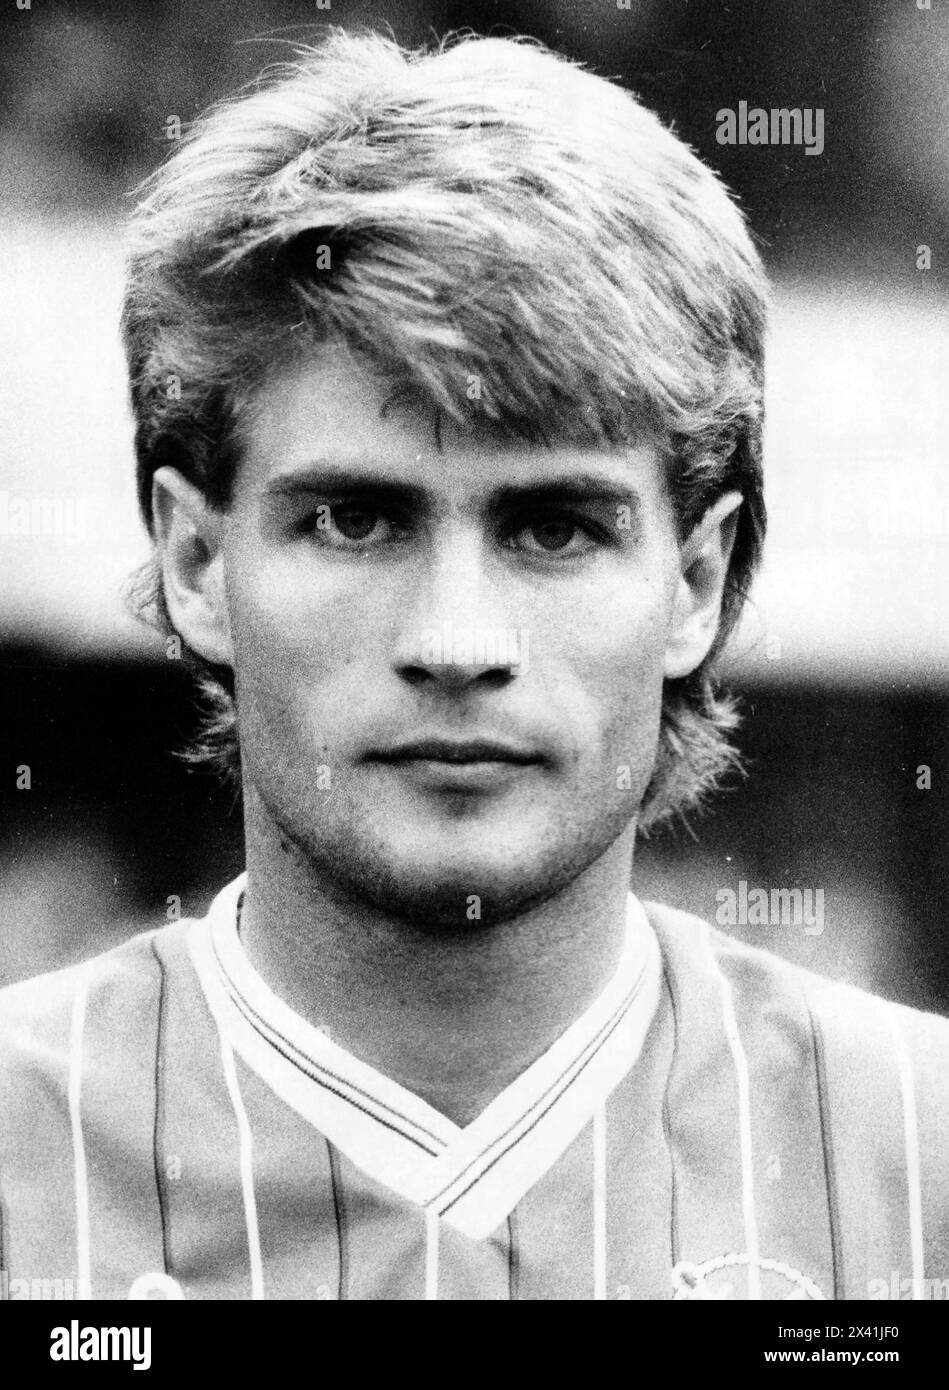 PORTSMOUTH FC PLAYER JOHN KERR, 1988 PIC MIKE WALKER, 1988 Stock Photo